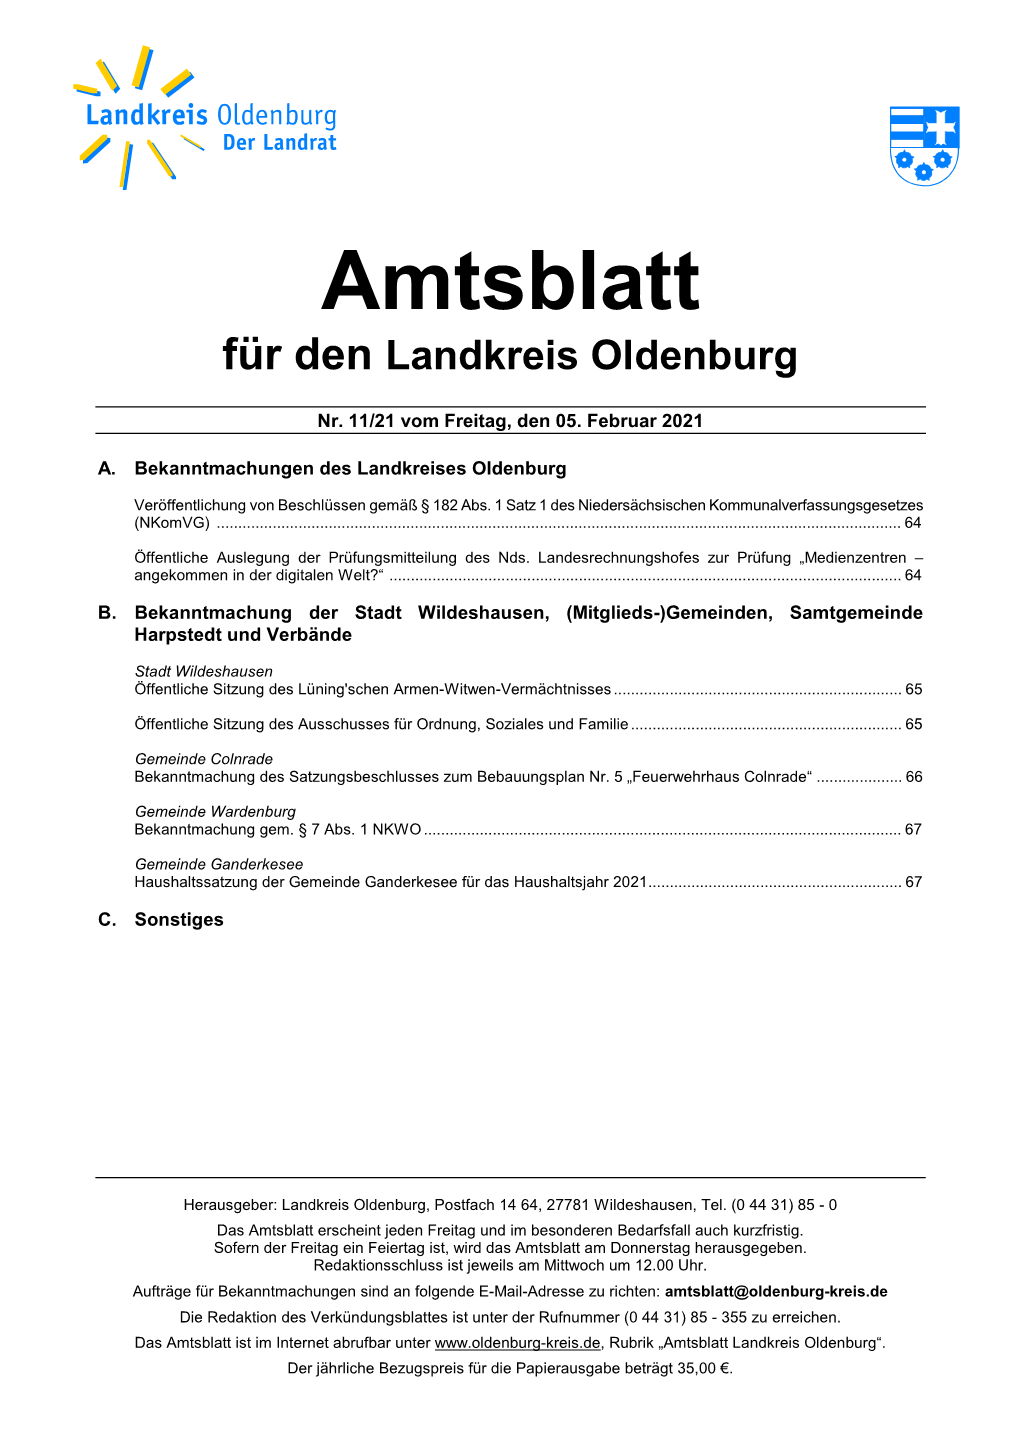 Amtsblatt Für Den Landkreis Oldenburg